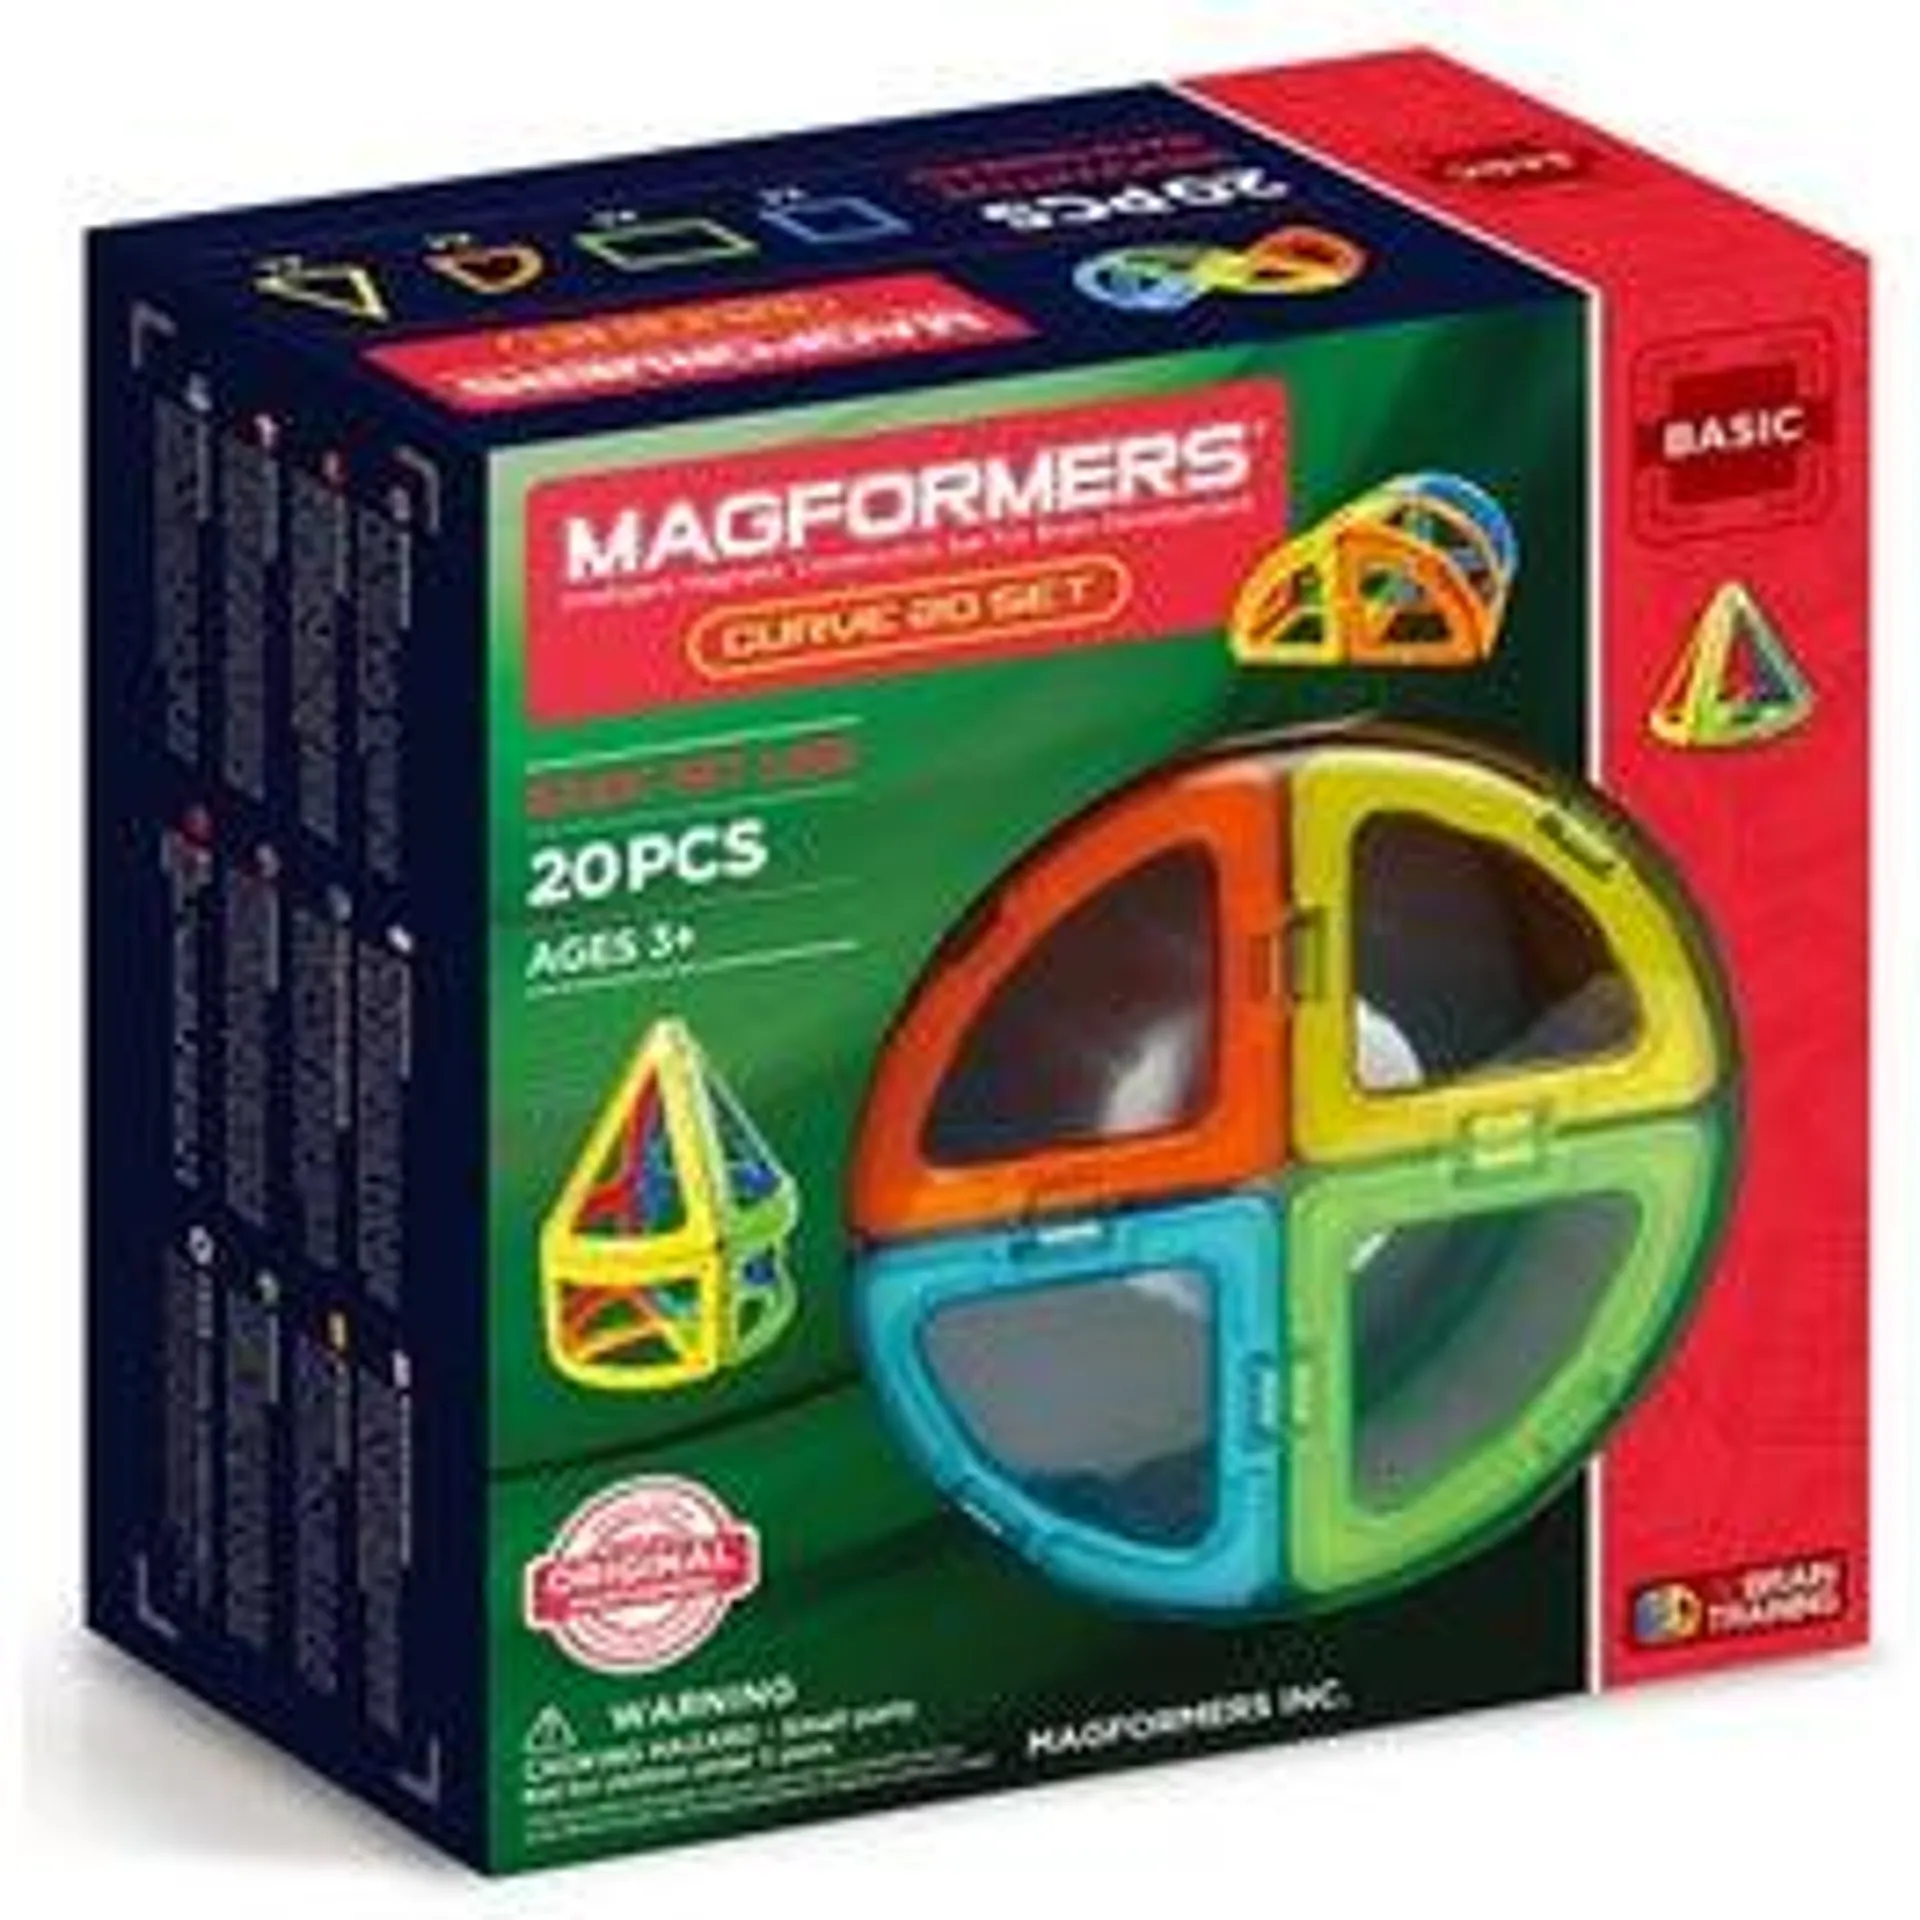 Magformers Curve Set (20pc)